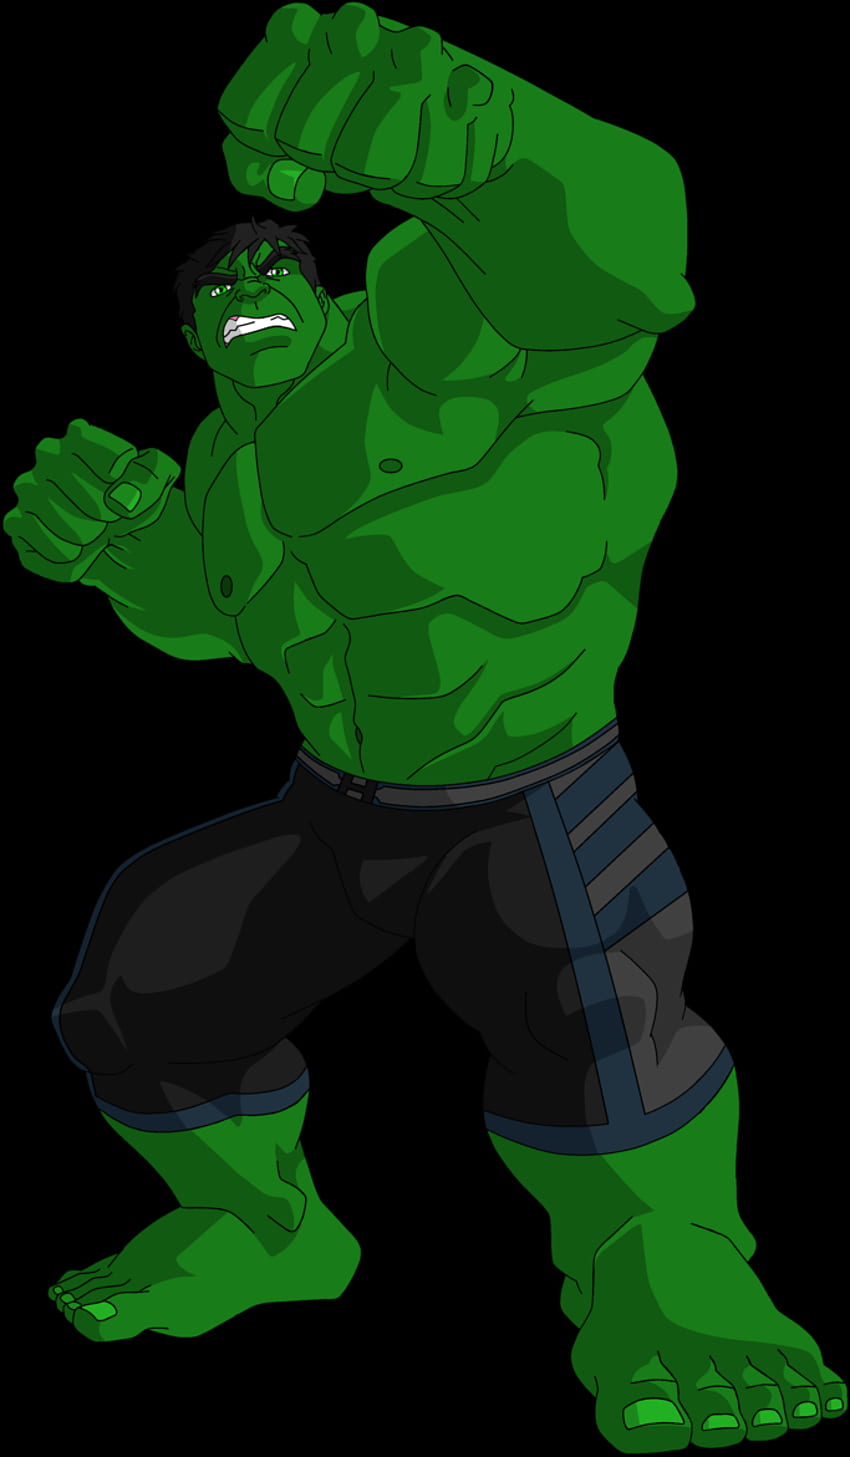 Incredible hulk clipart 1 stacja clipart. Grafika Hulka, Avengers Hulka, szkic Hulka, Incredible Hulk Cartoon Tapeta na telefon HD